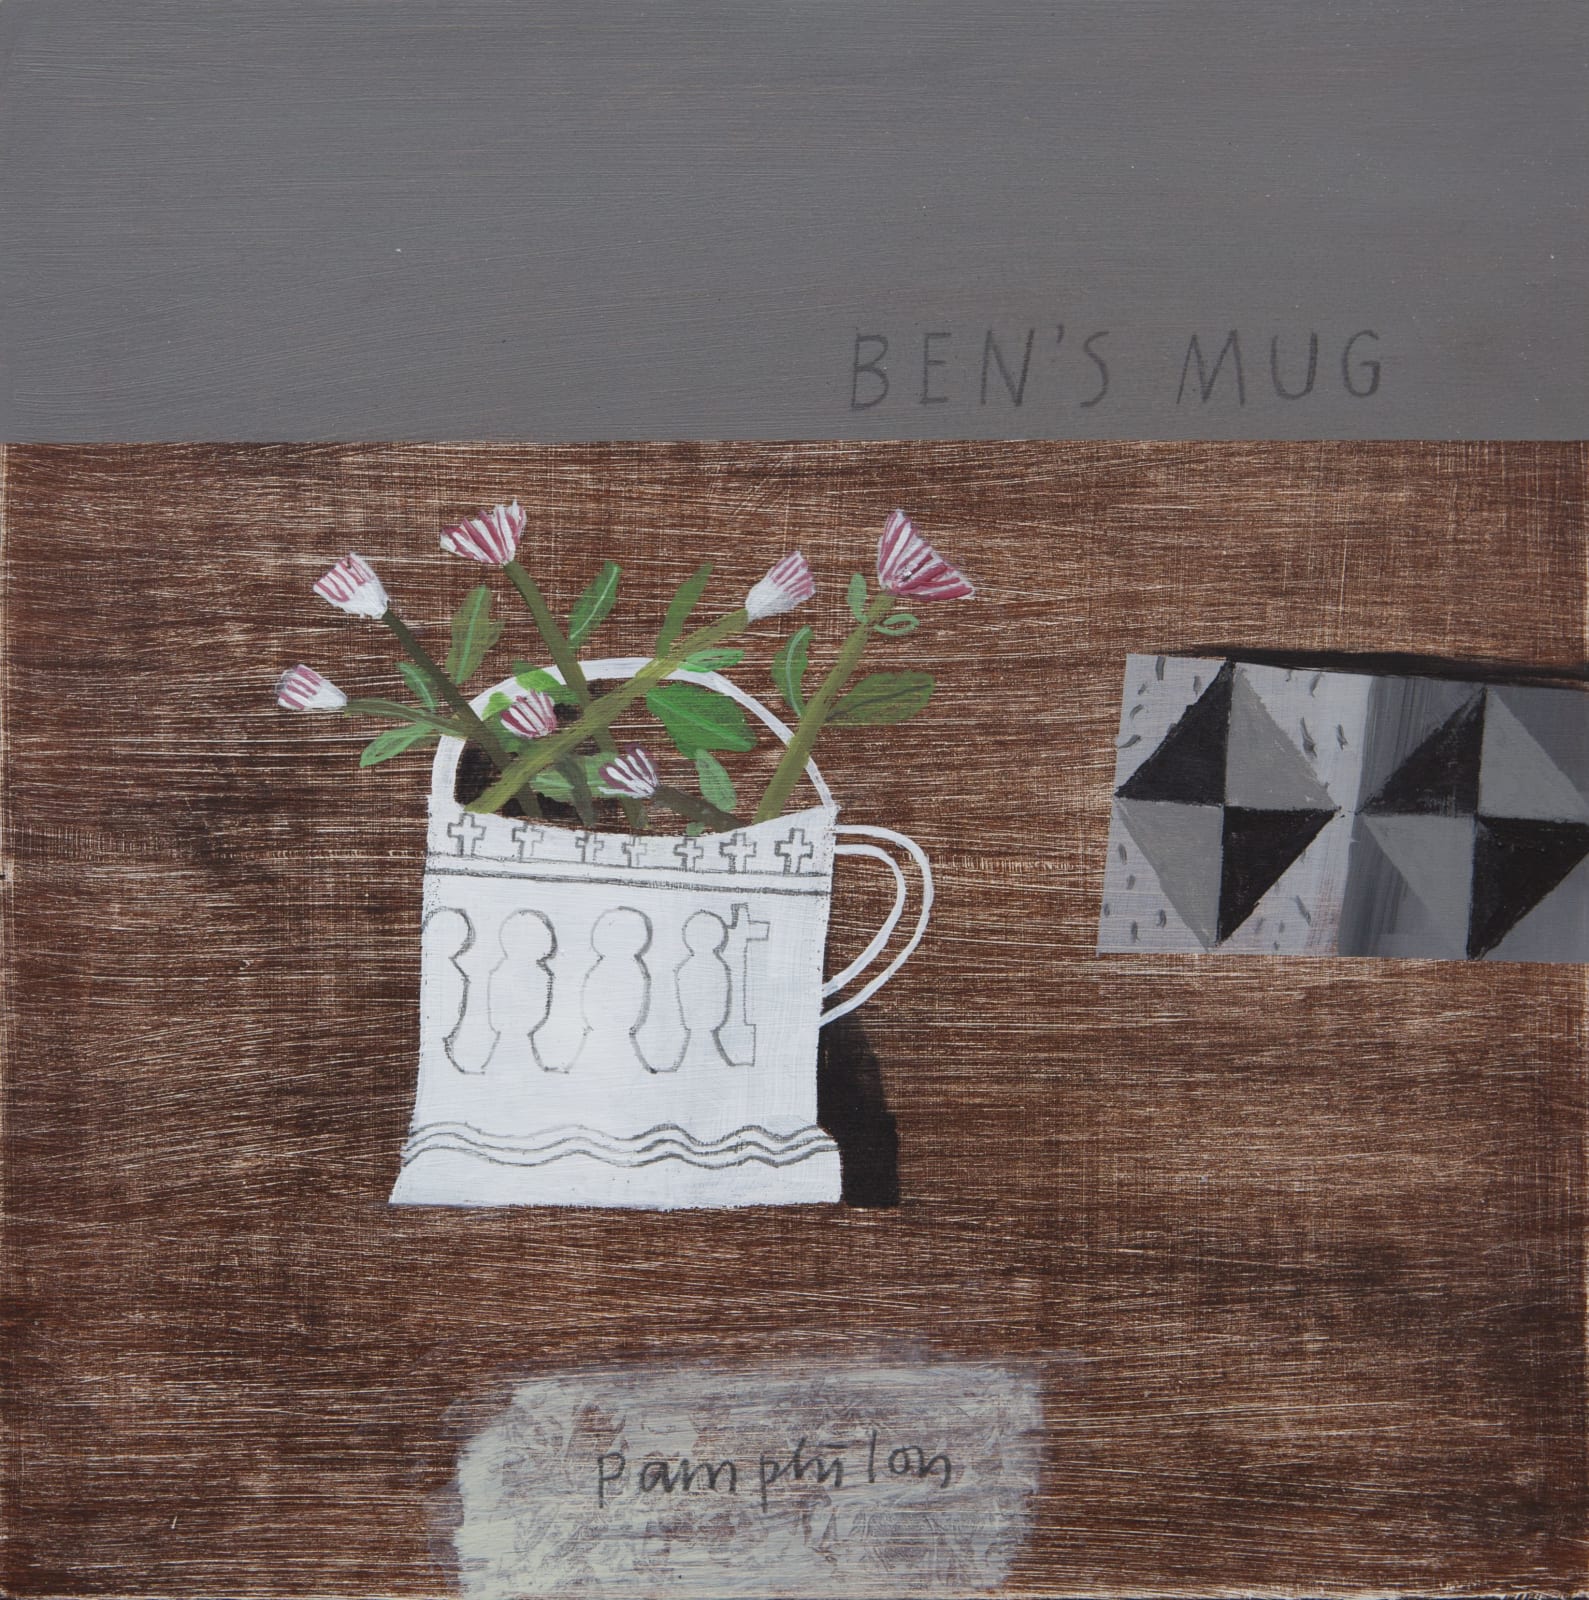 Elaine Pamphilon, Ben's Mug